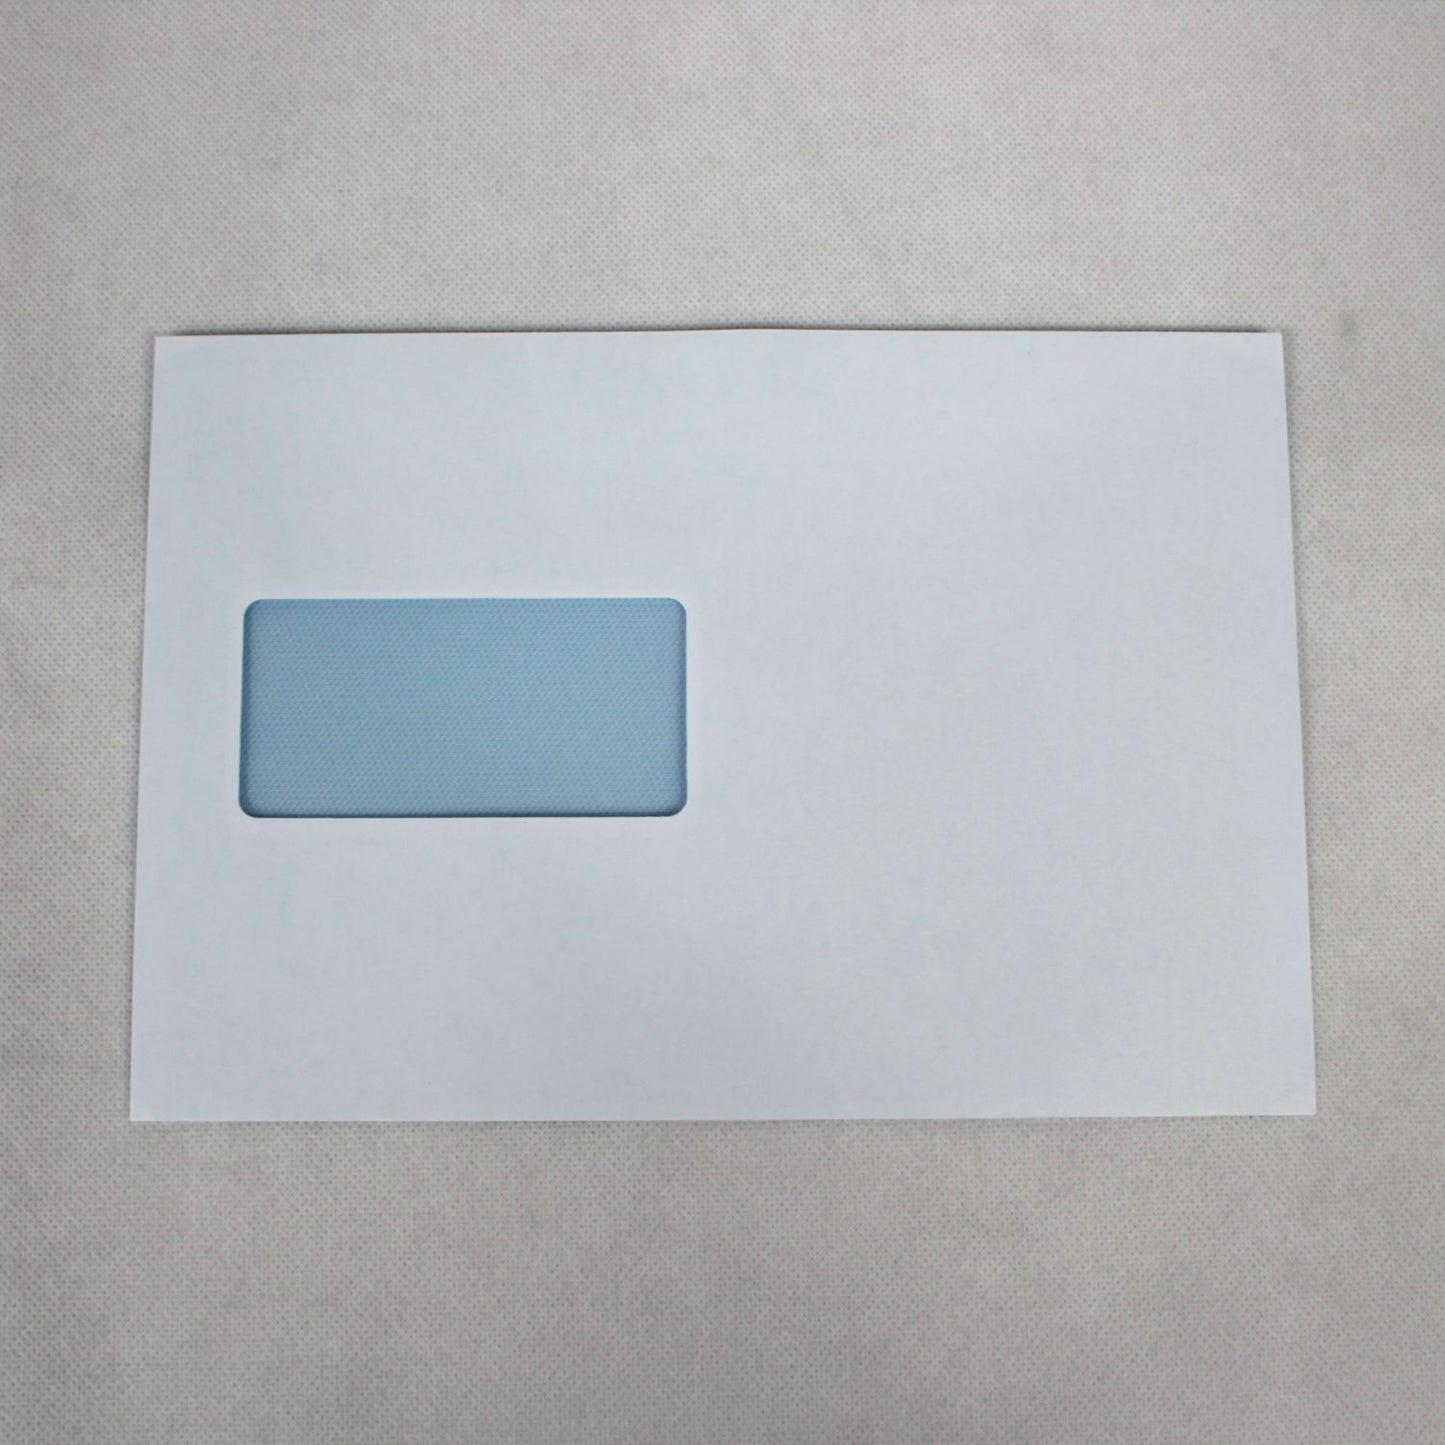 162x235mm C5+ White Gummed Envelopes (Window 45x90mm / Outside Seams)